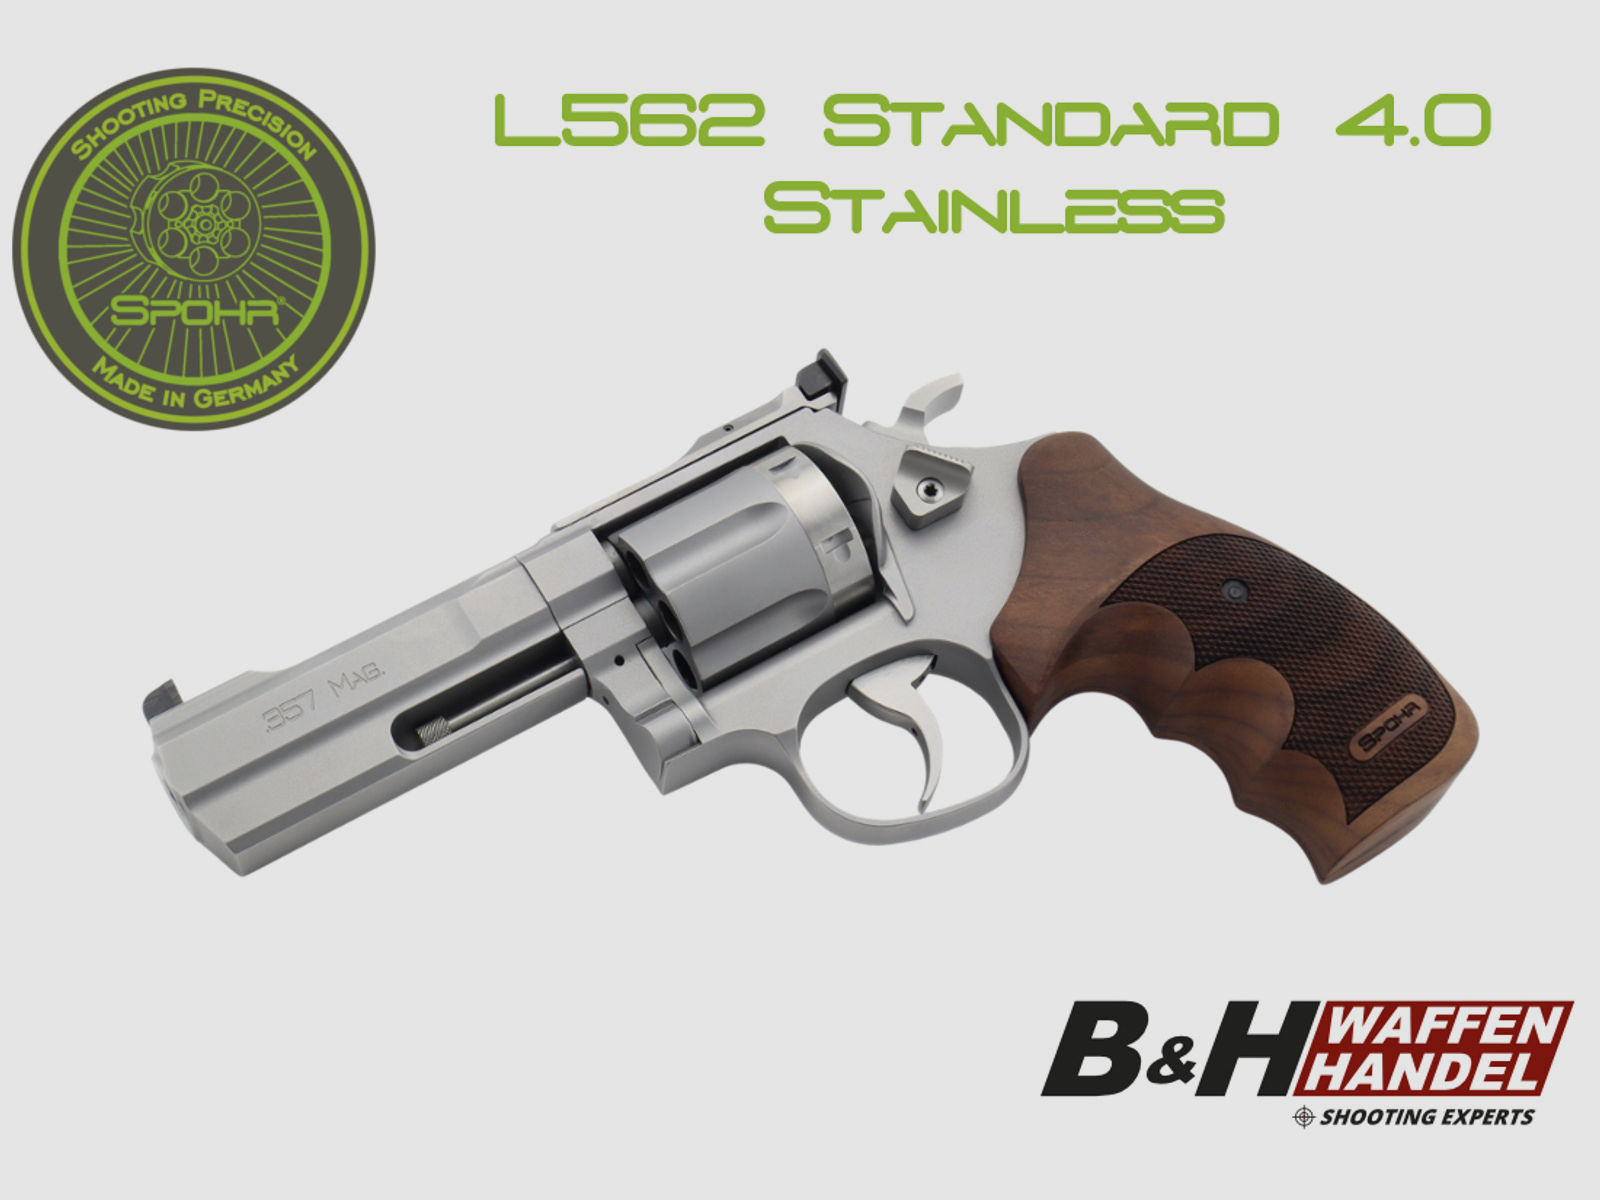 Spohr L562 Standard 4.0 Stainless 4 Zoll Revolver Jagd / Sport Made in Germany